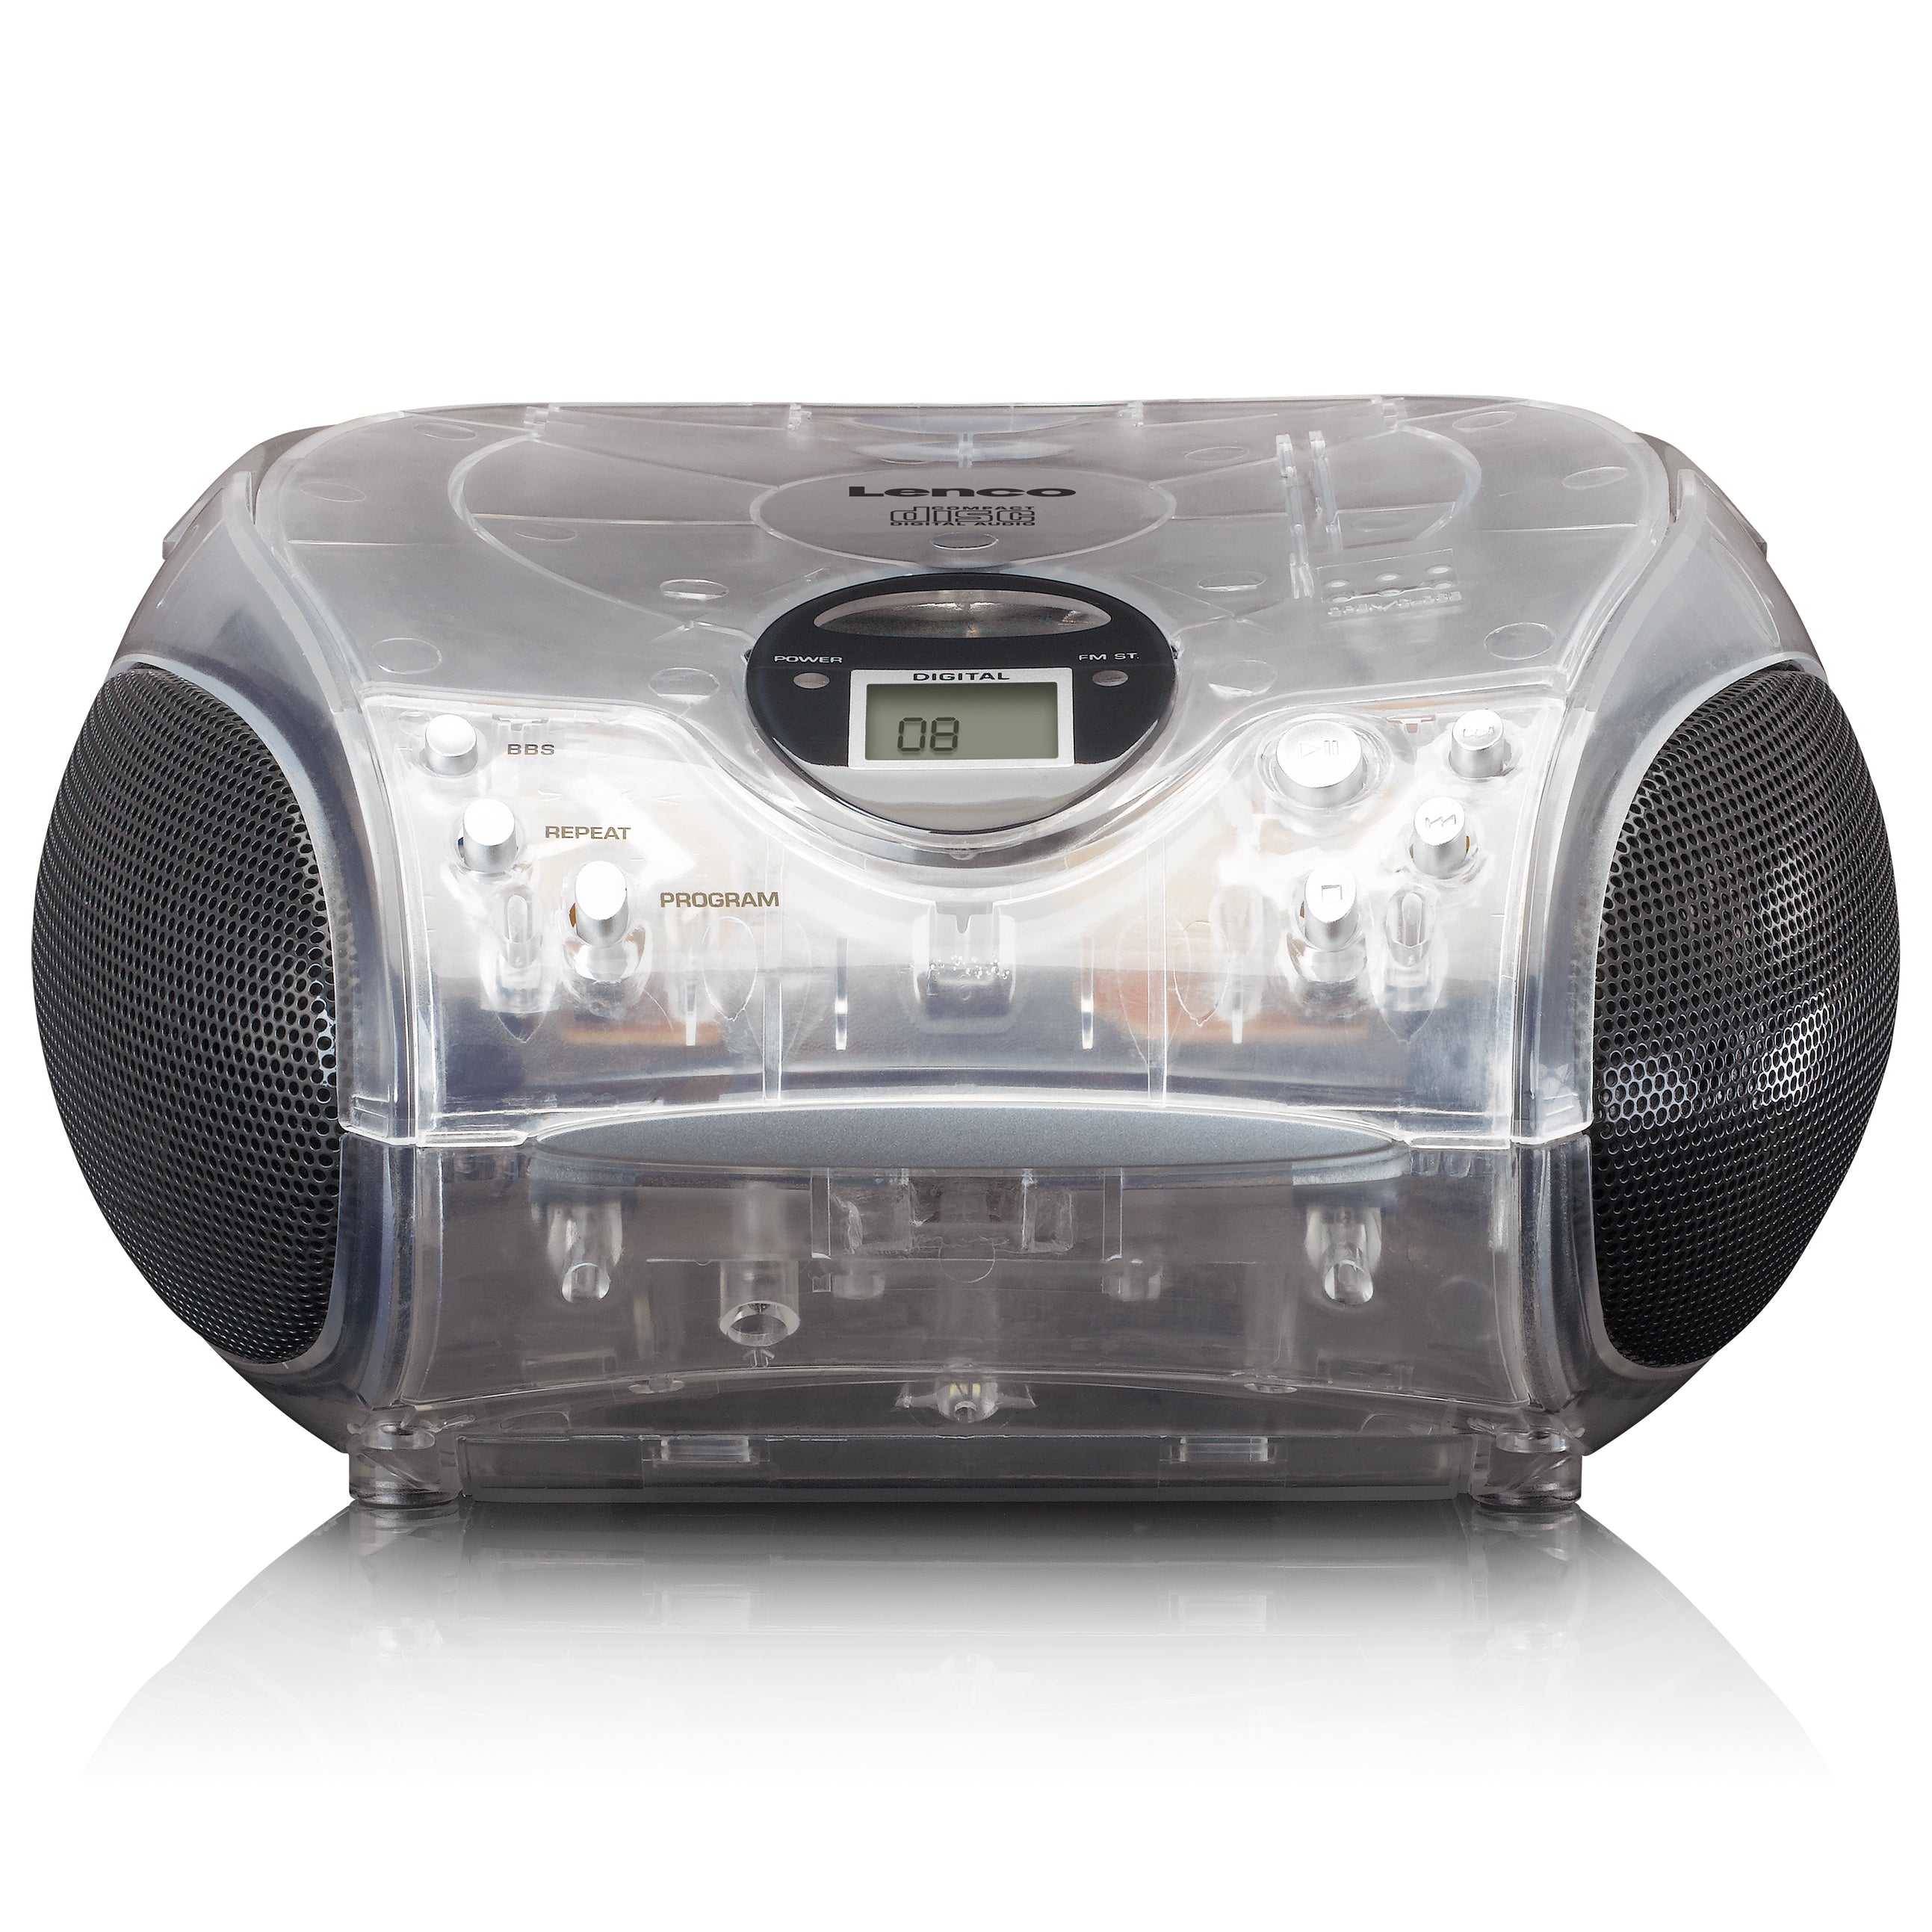 LENCO - SCD-24TR UK - Portable stereo FM radio with CD player - Transparent